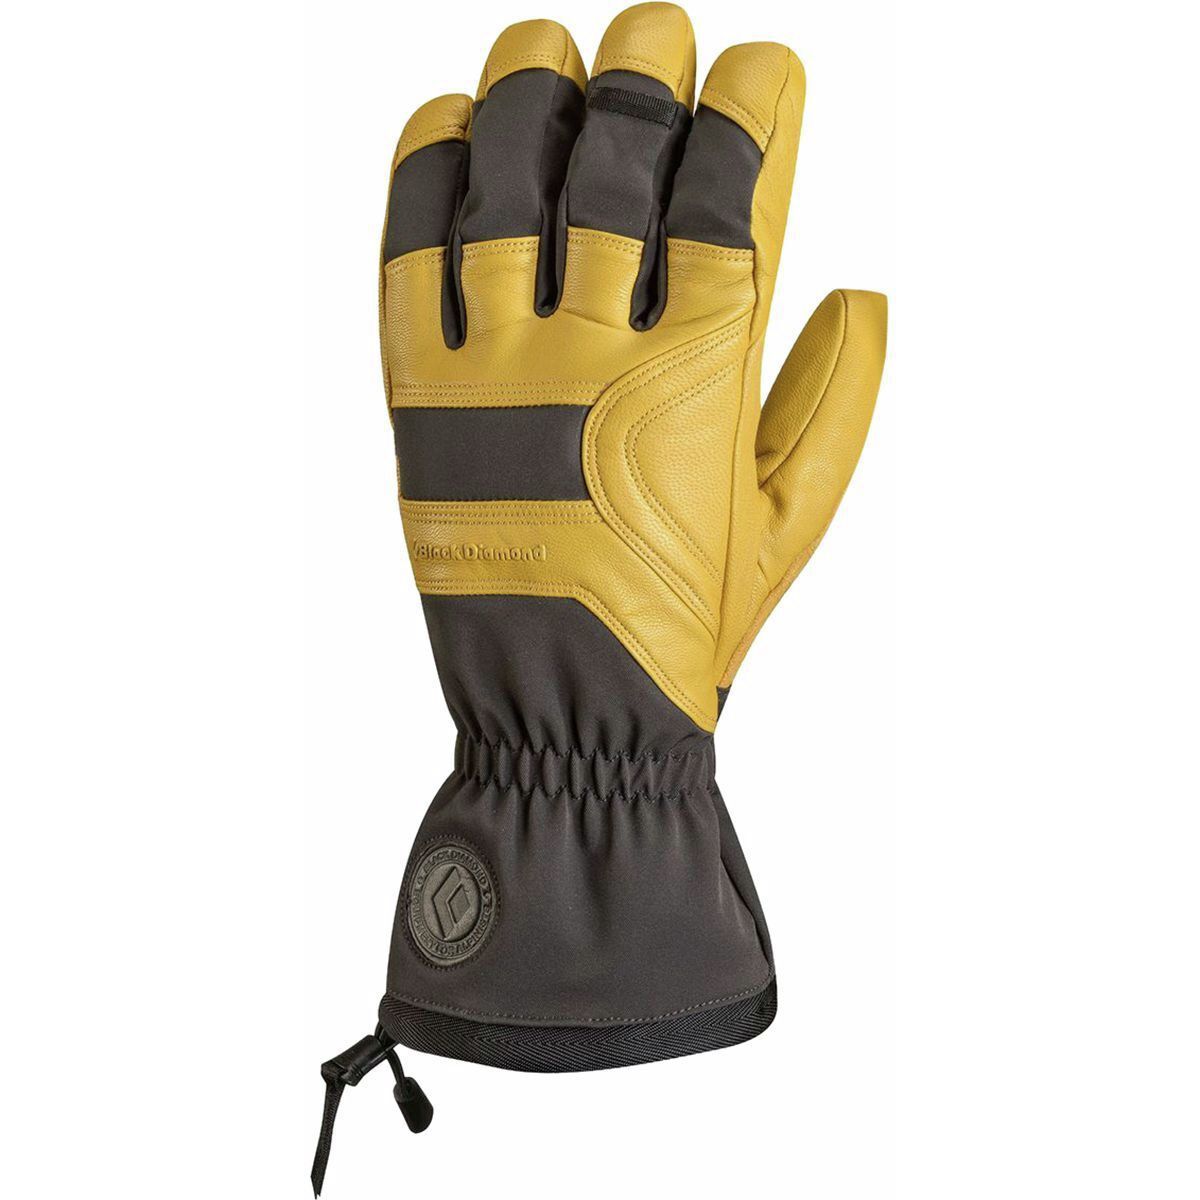 Black Diamond Patrol Glove - Men's